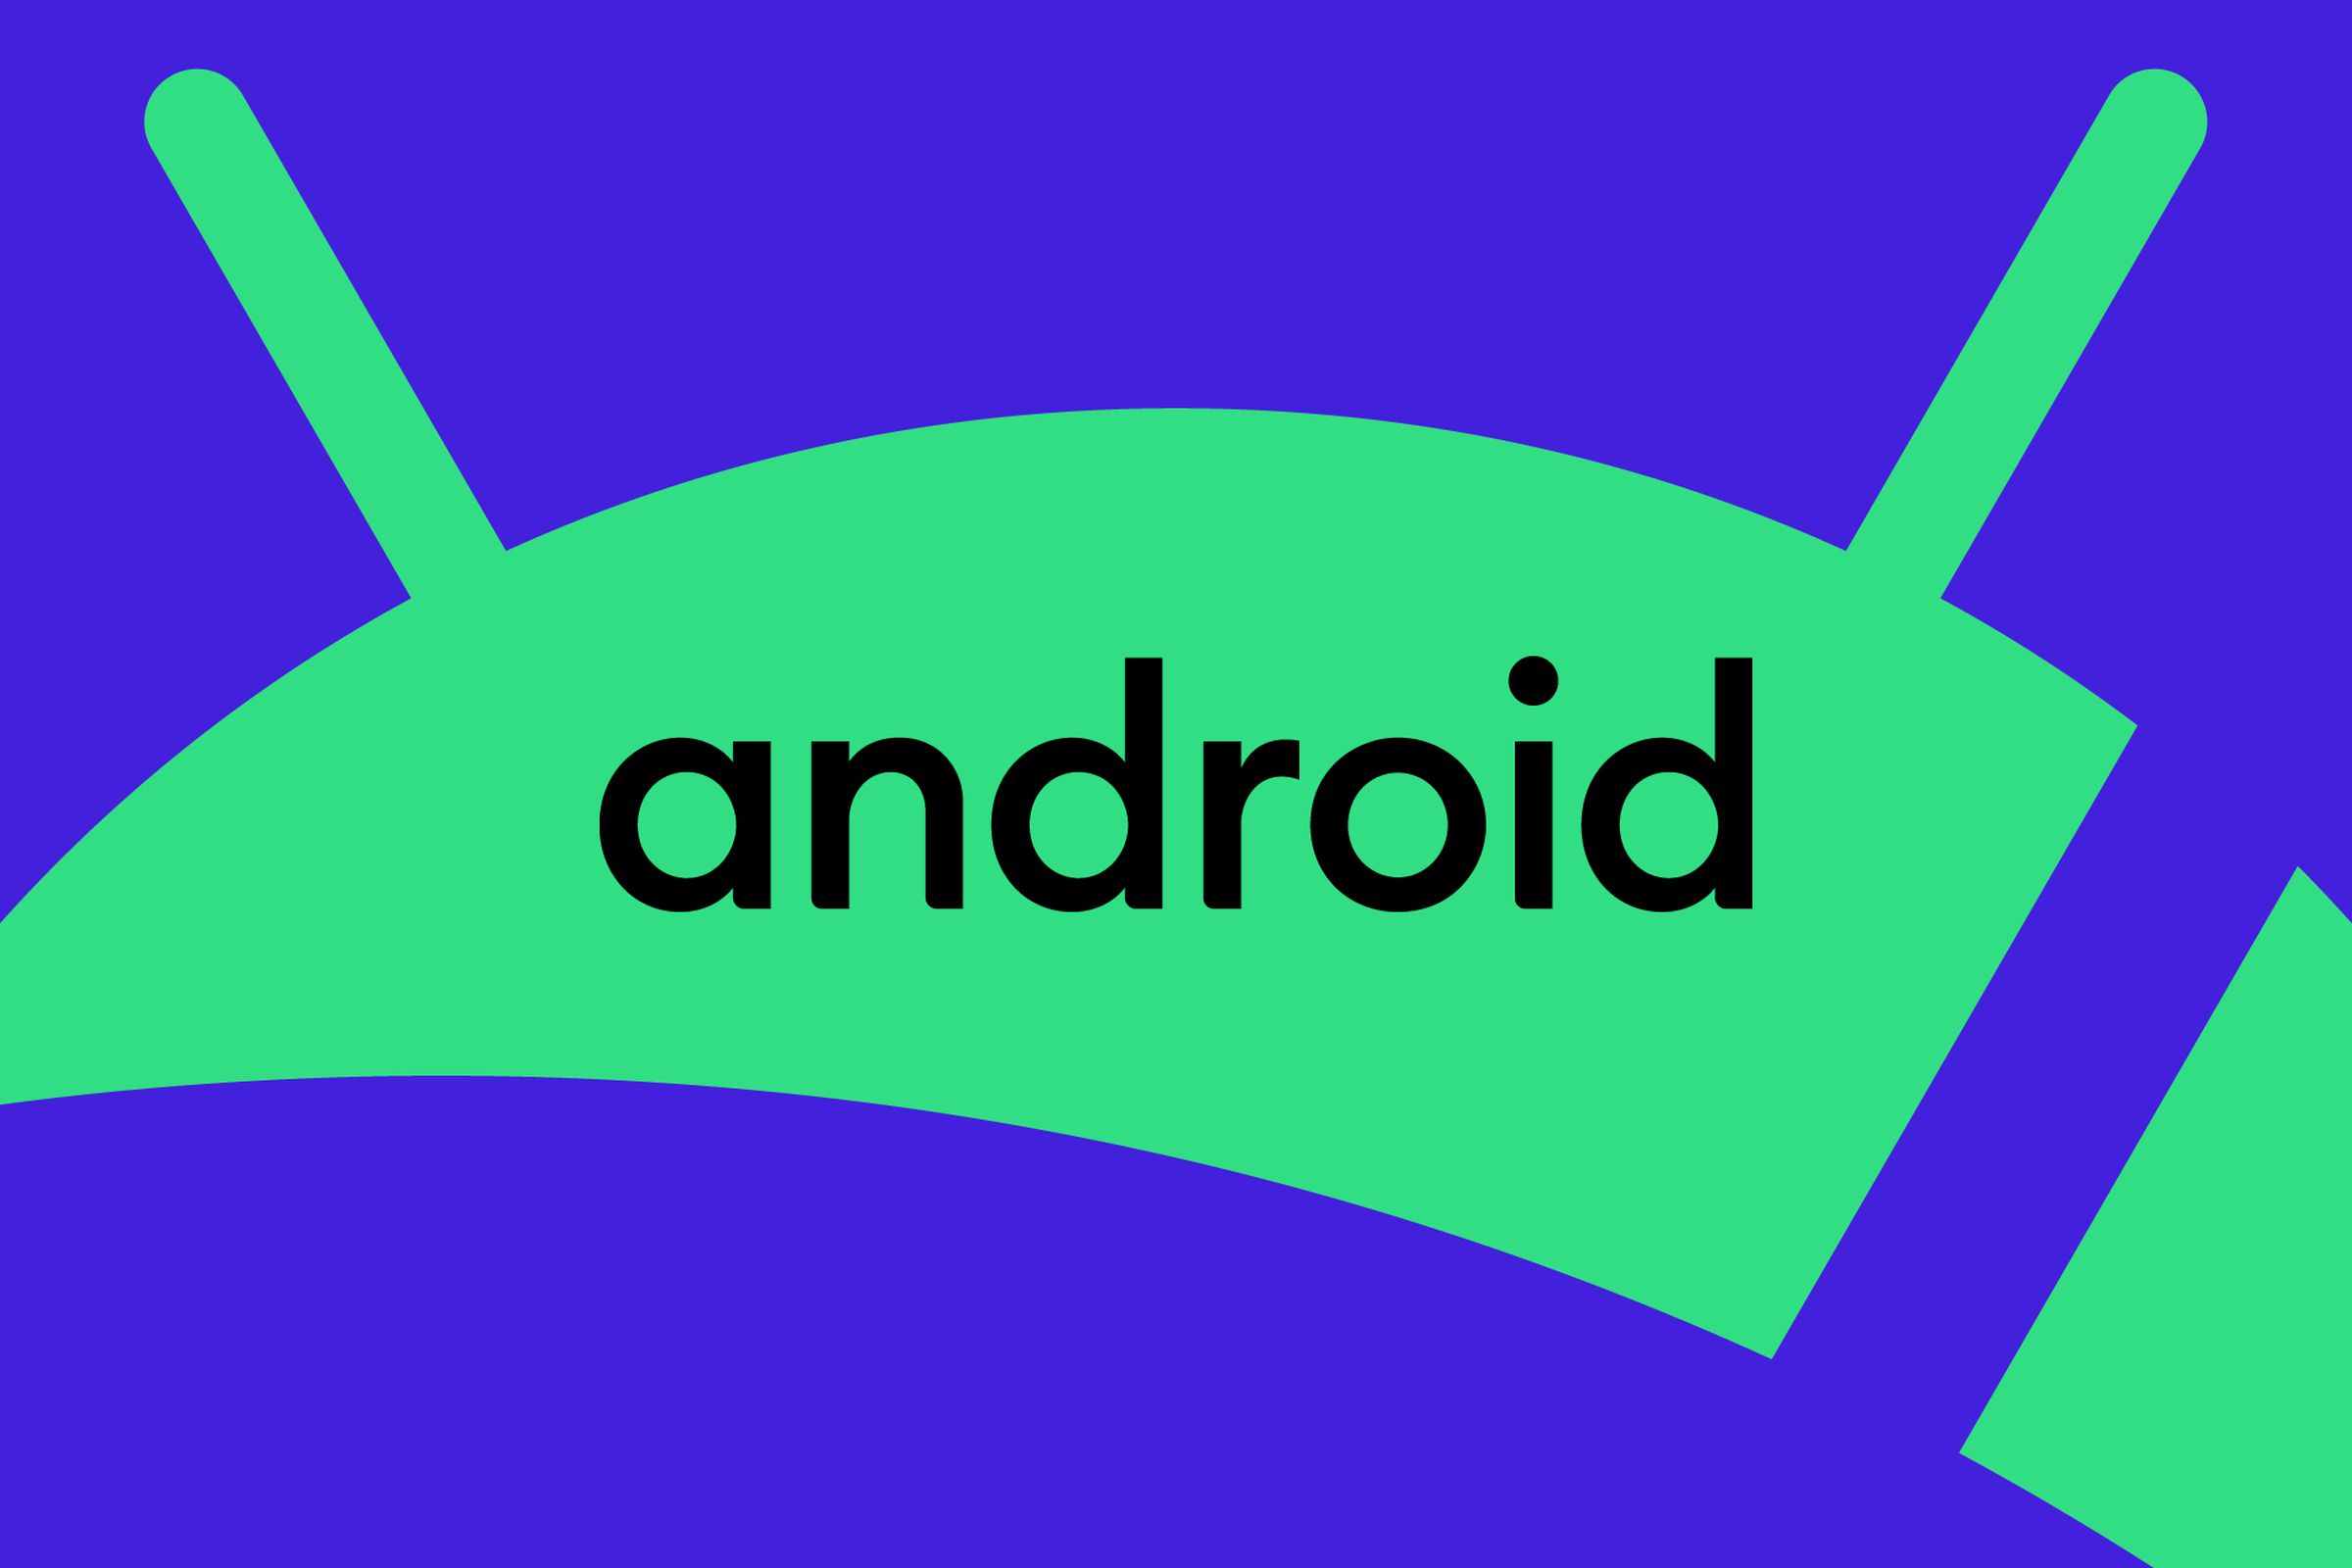 Logo Android dengan latar belakang gradasi hijau dan biru.